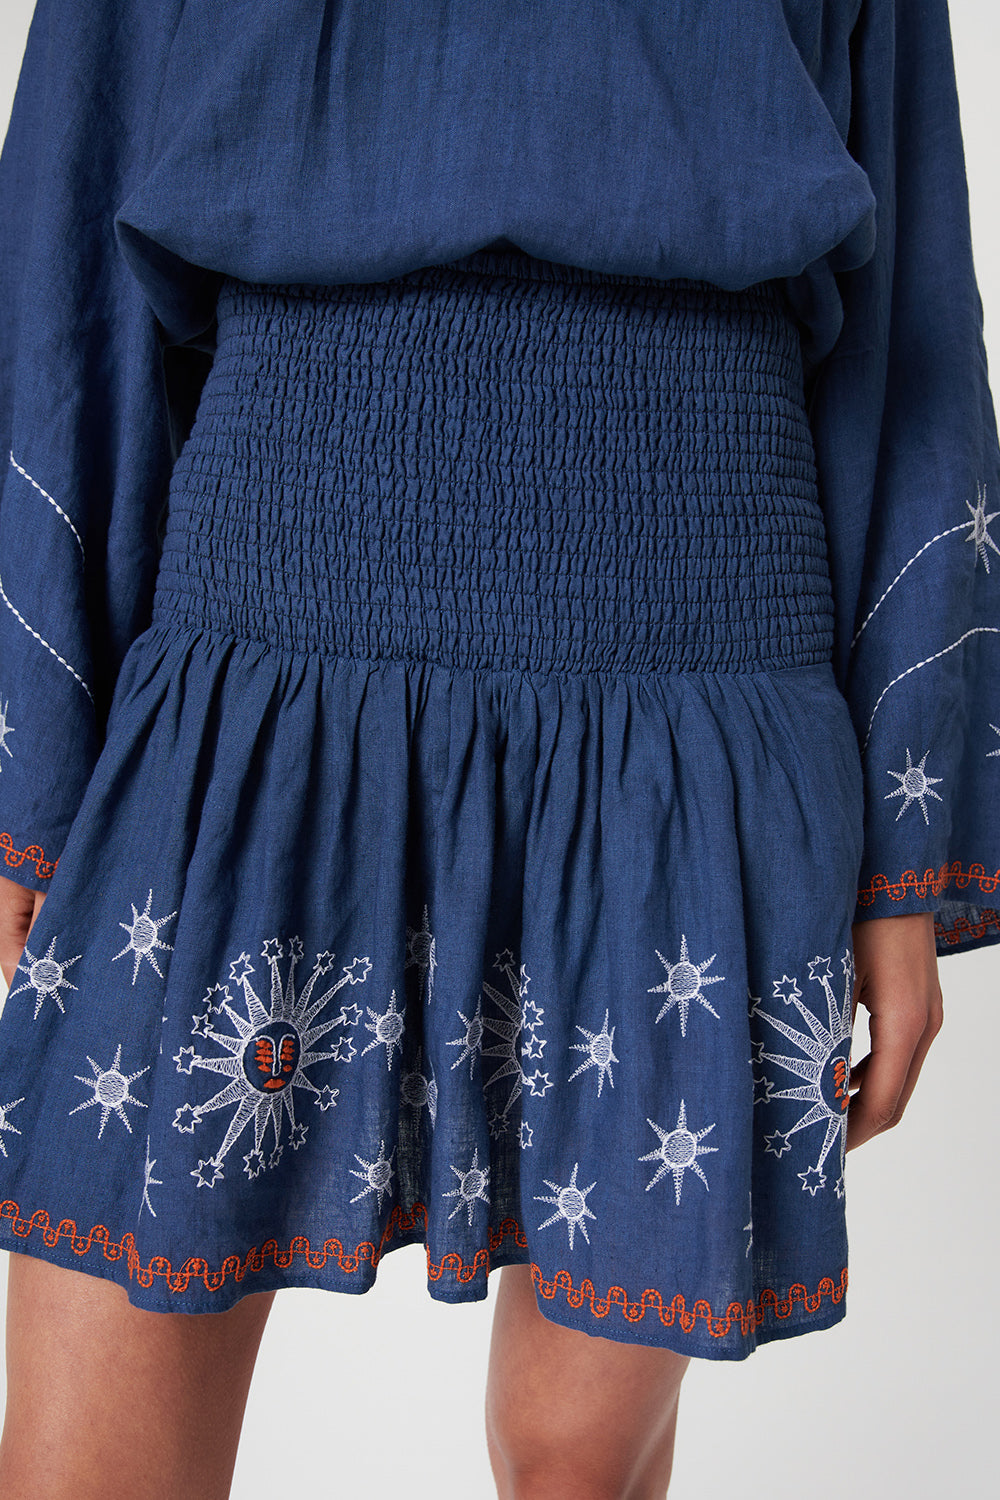 Alton Embroidered Skirt